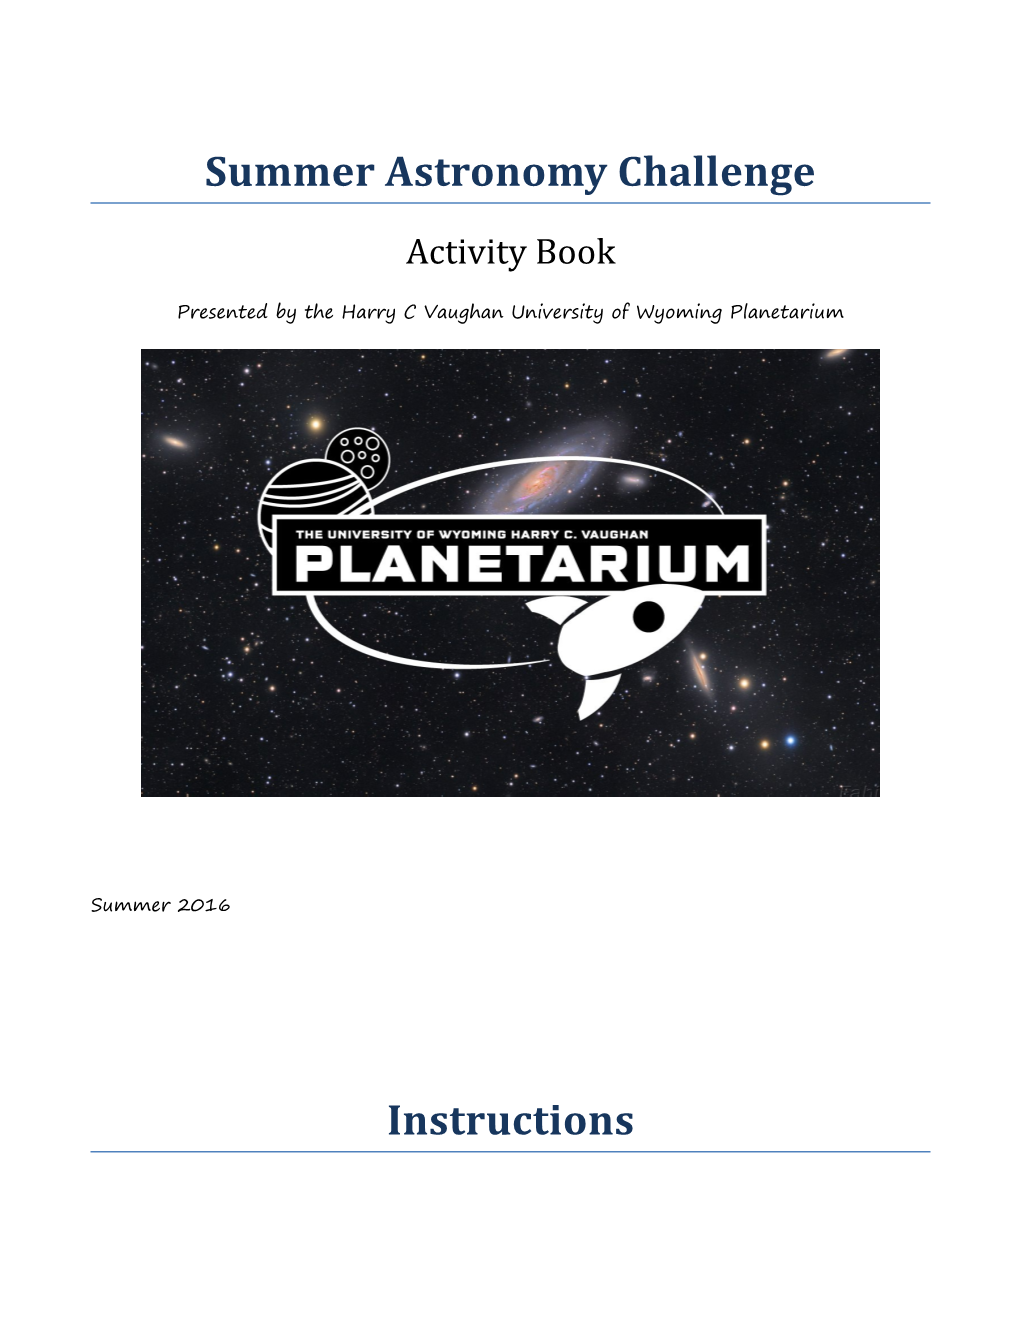 Presented by the Harry C Vaughan University of Wyoming Planetarium